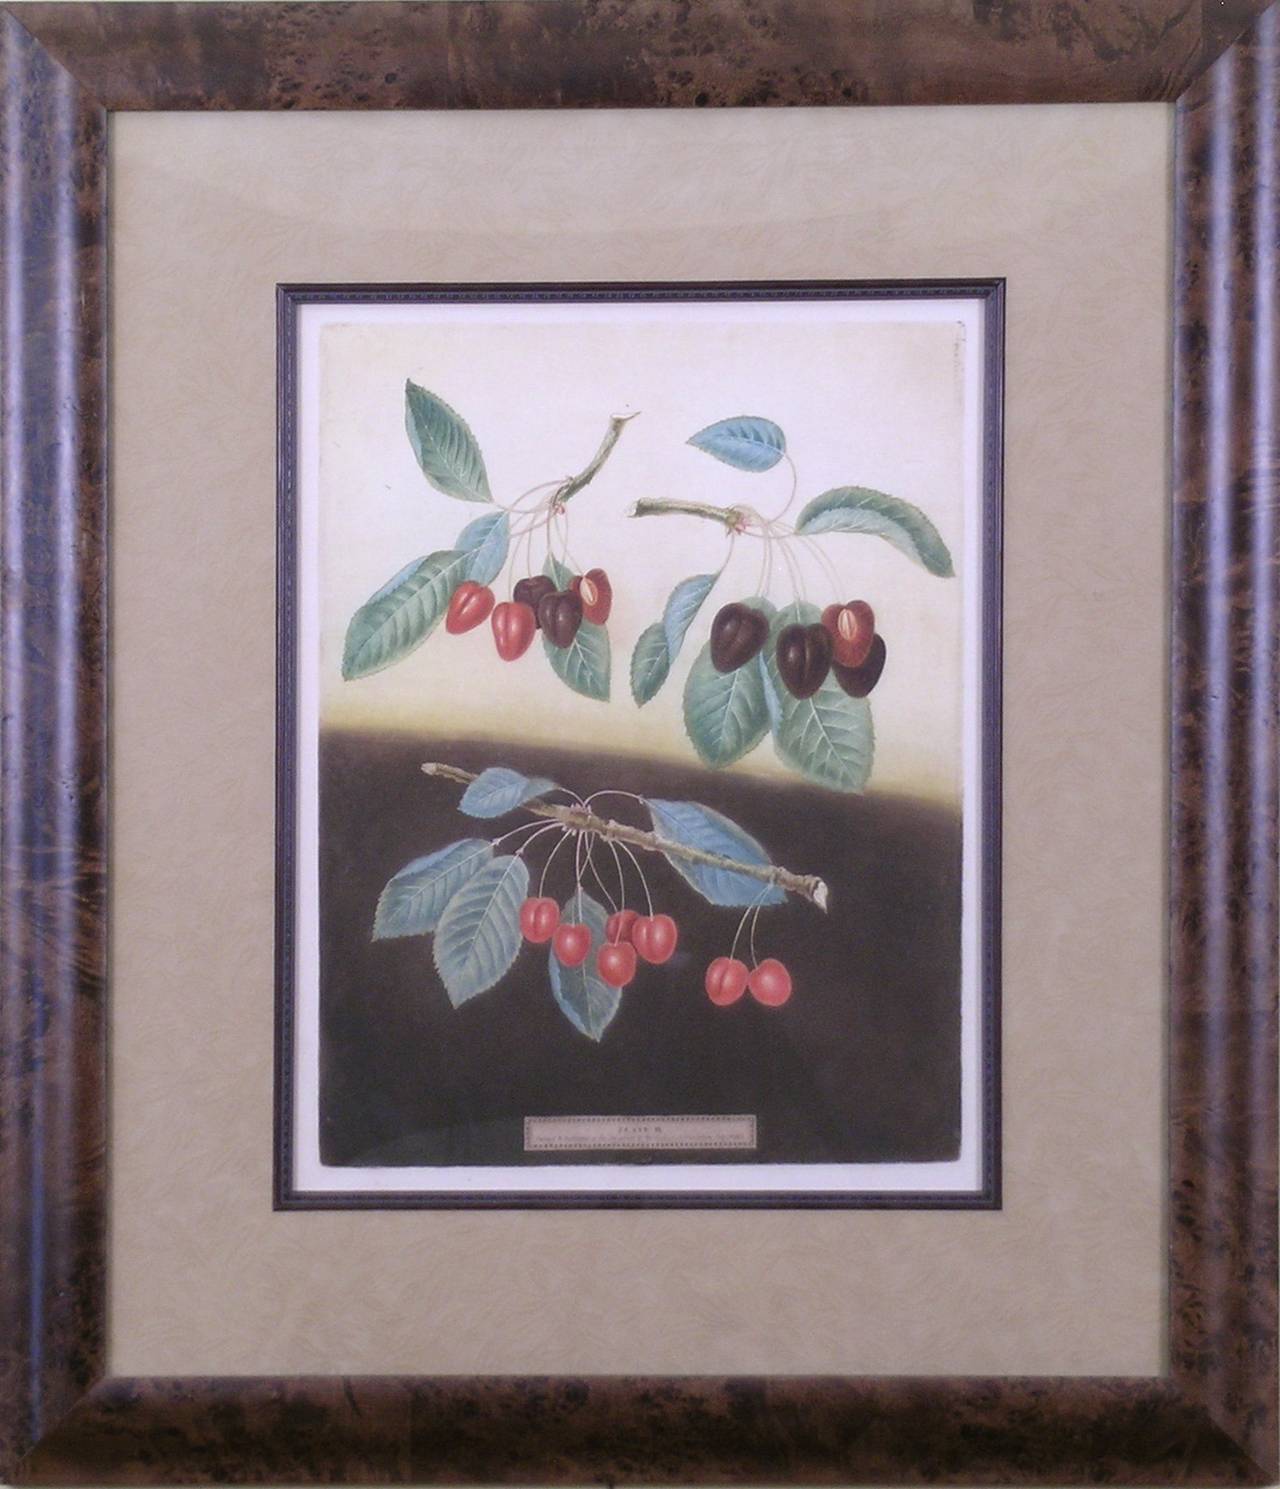 Cherries.  Plate IX. - Print by george brookshaw